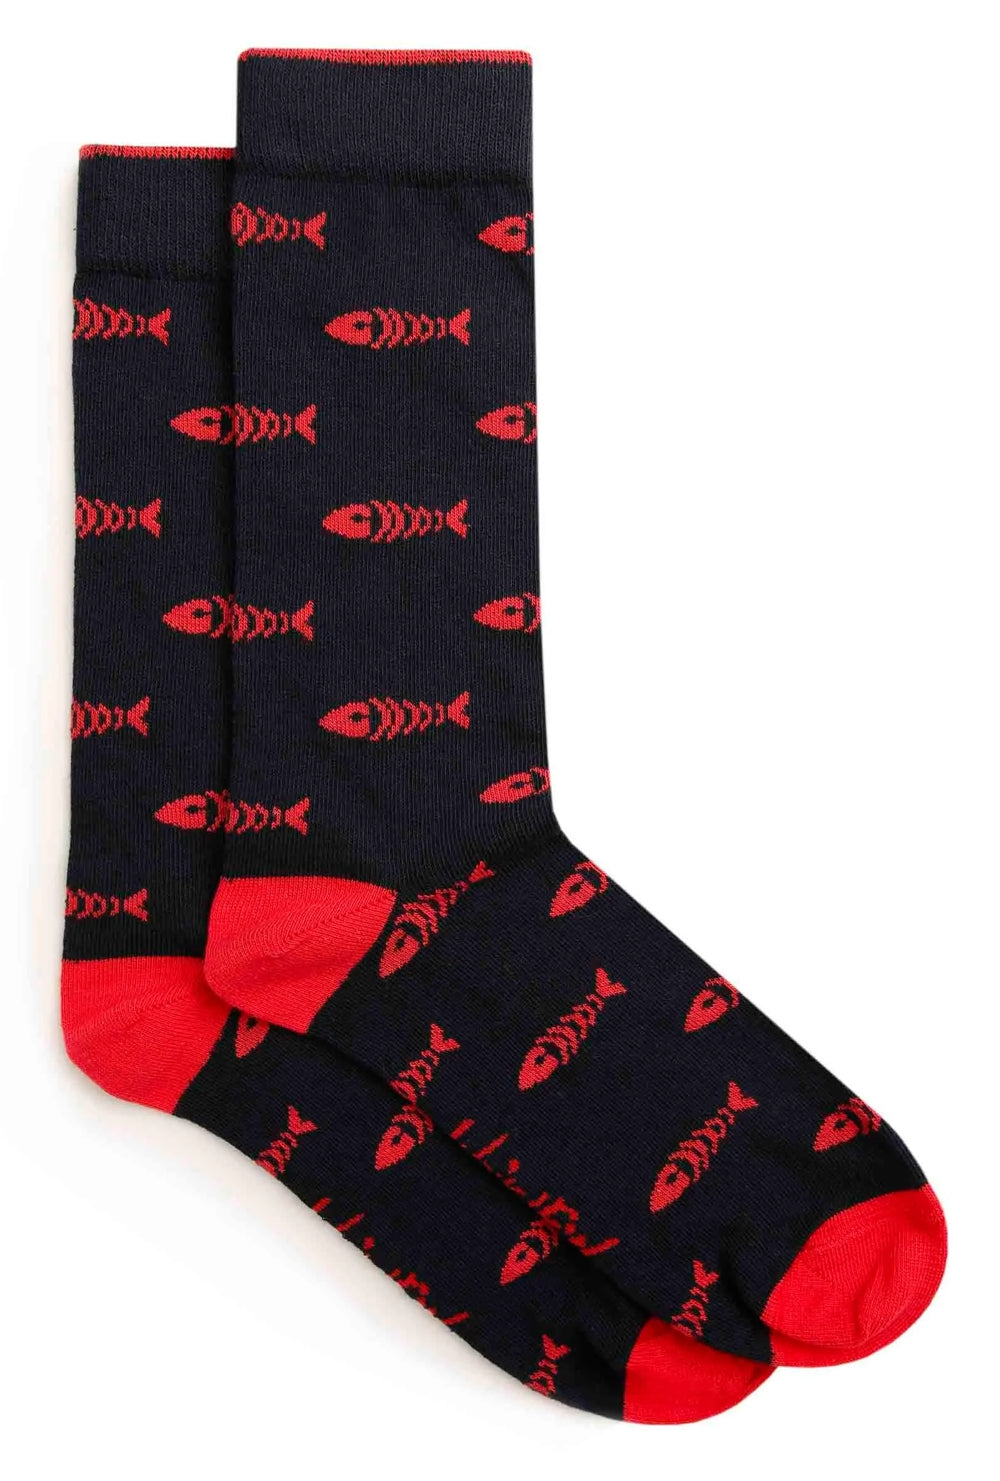 Men's Weird Fish Ronan red fishbone pattern socks.